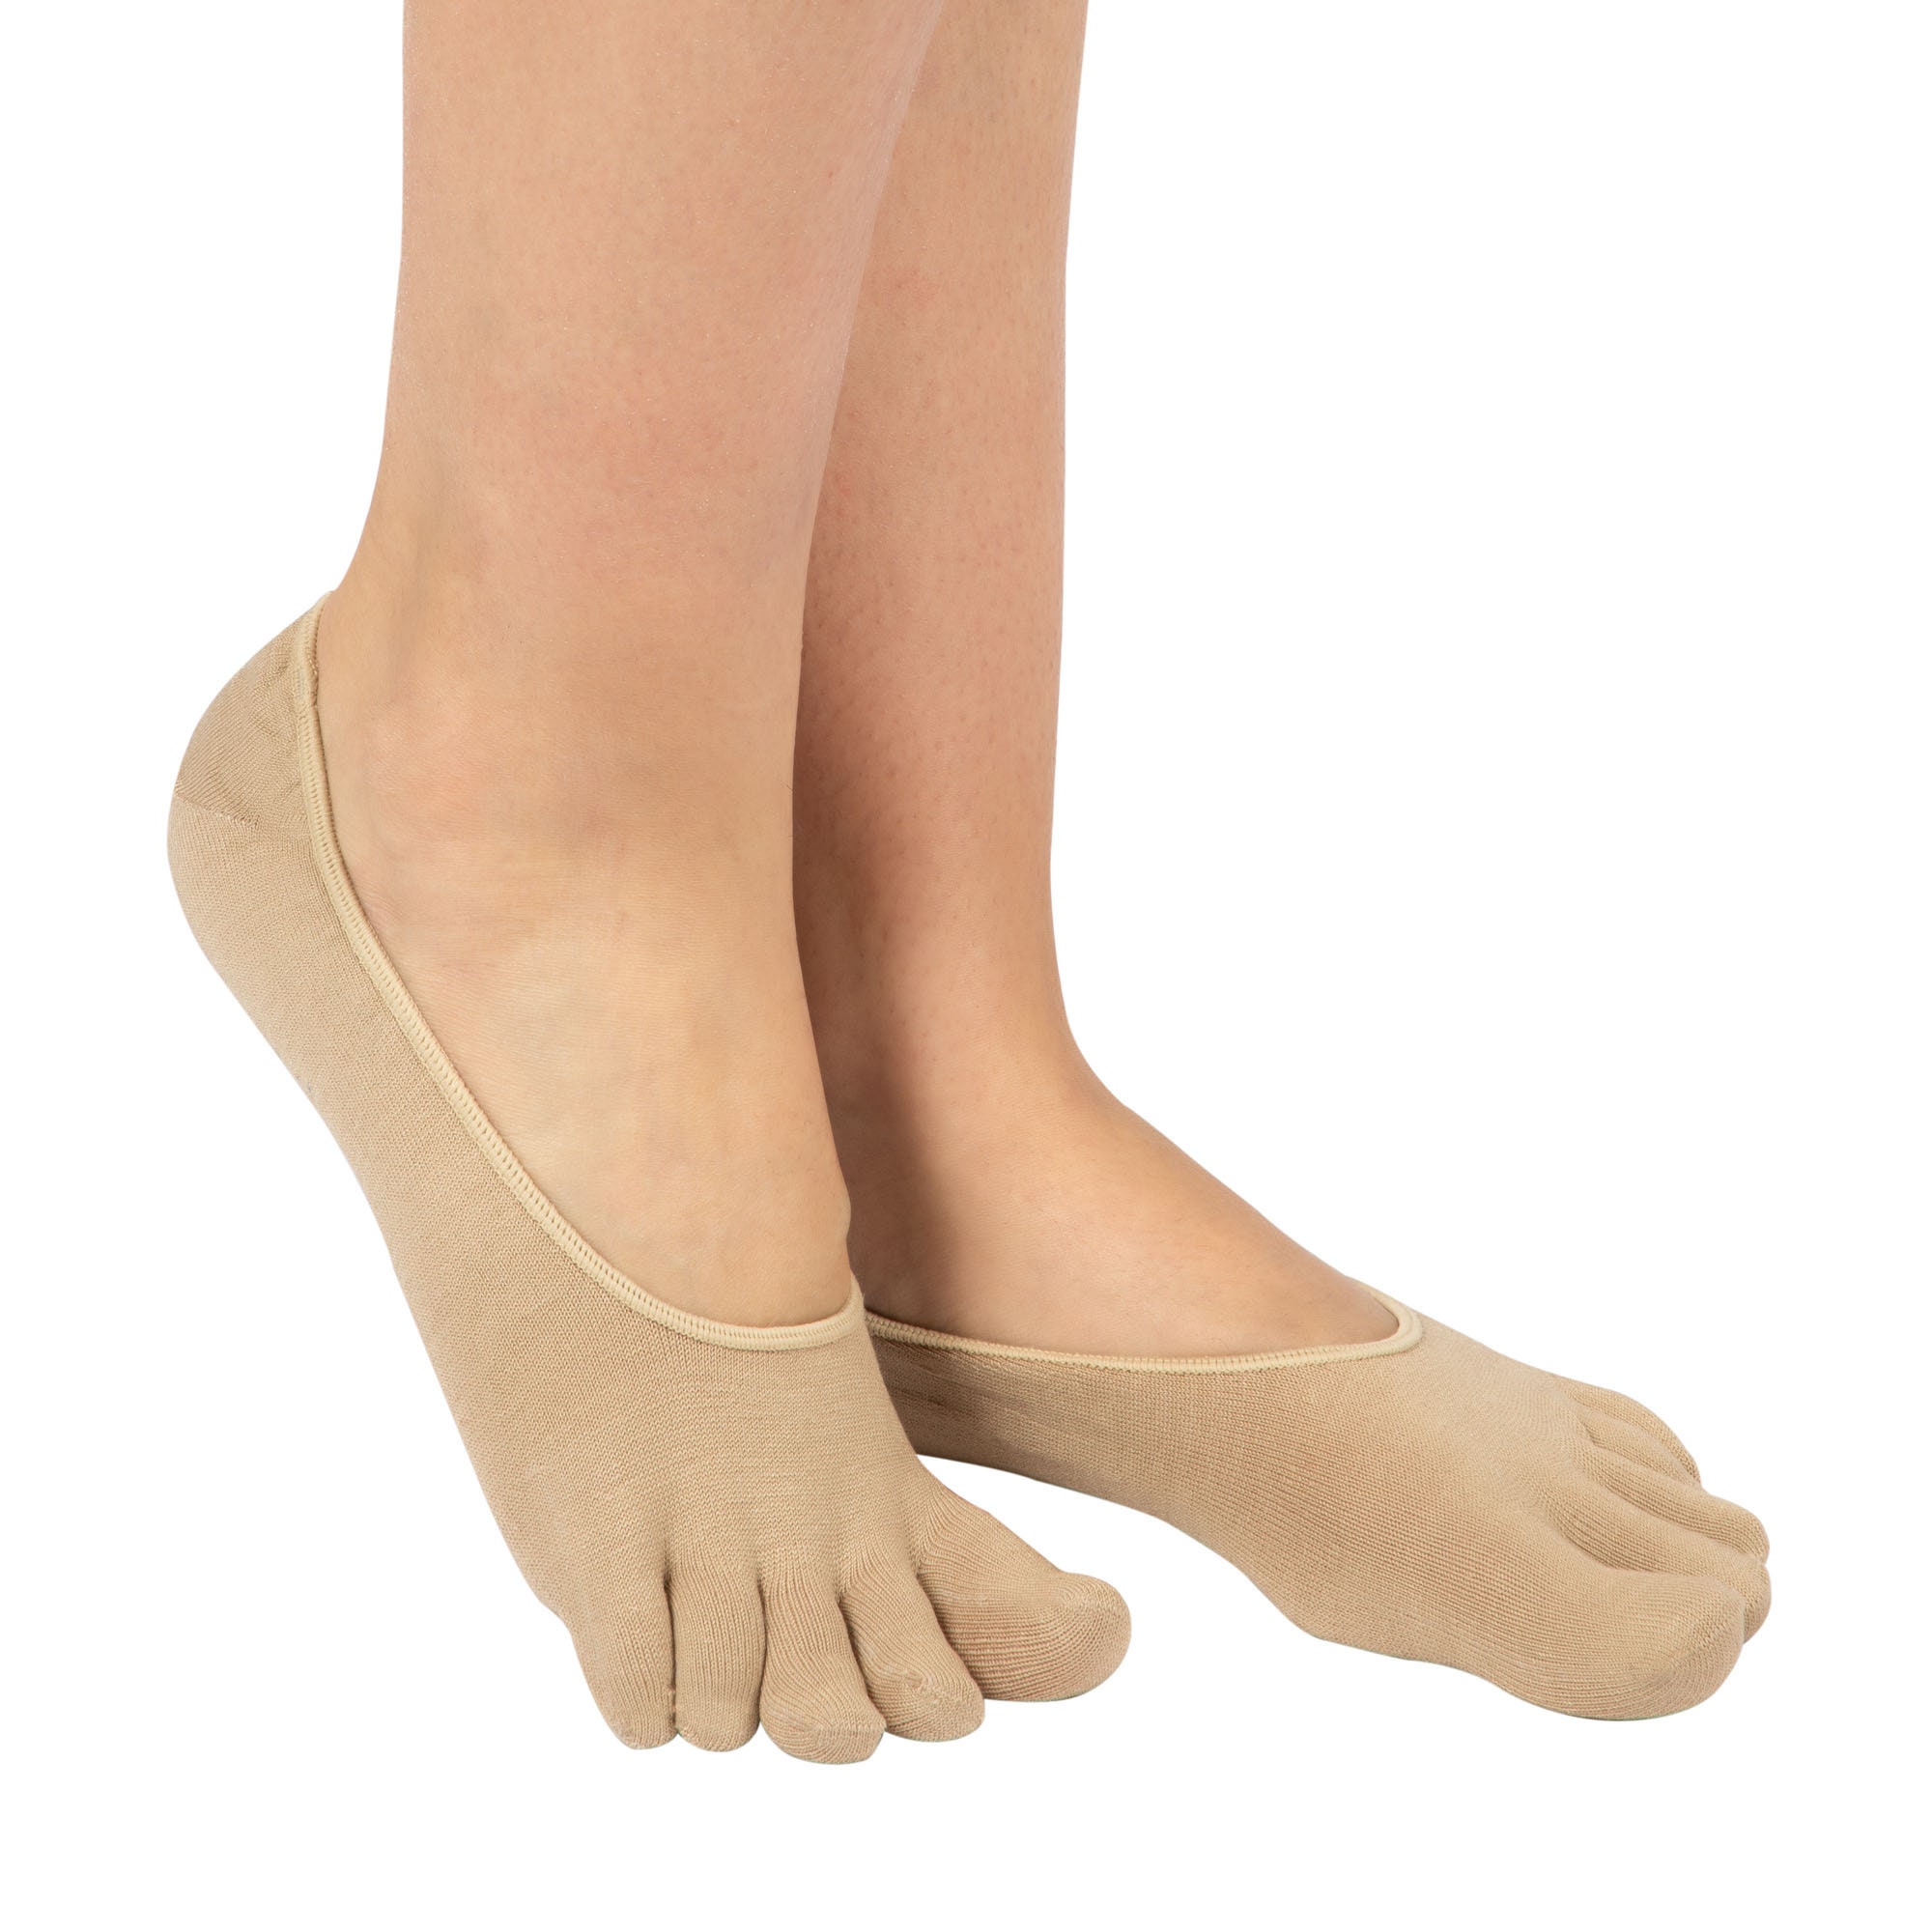 TOETOE Women Essential / Everyday Stretchy Foot-cover / No-show Silk  Seamless Plain Toe Socks, Hygienic, Breathable UK 3-5.5 EU 35-38 